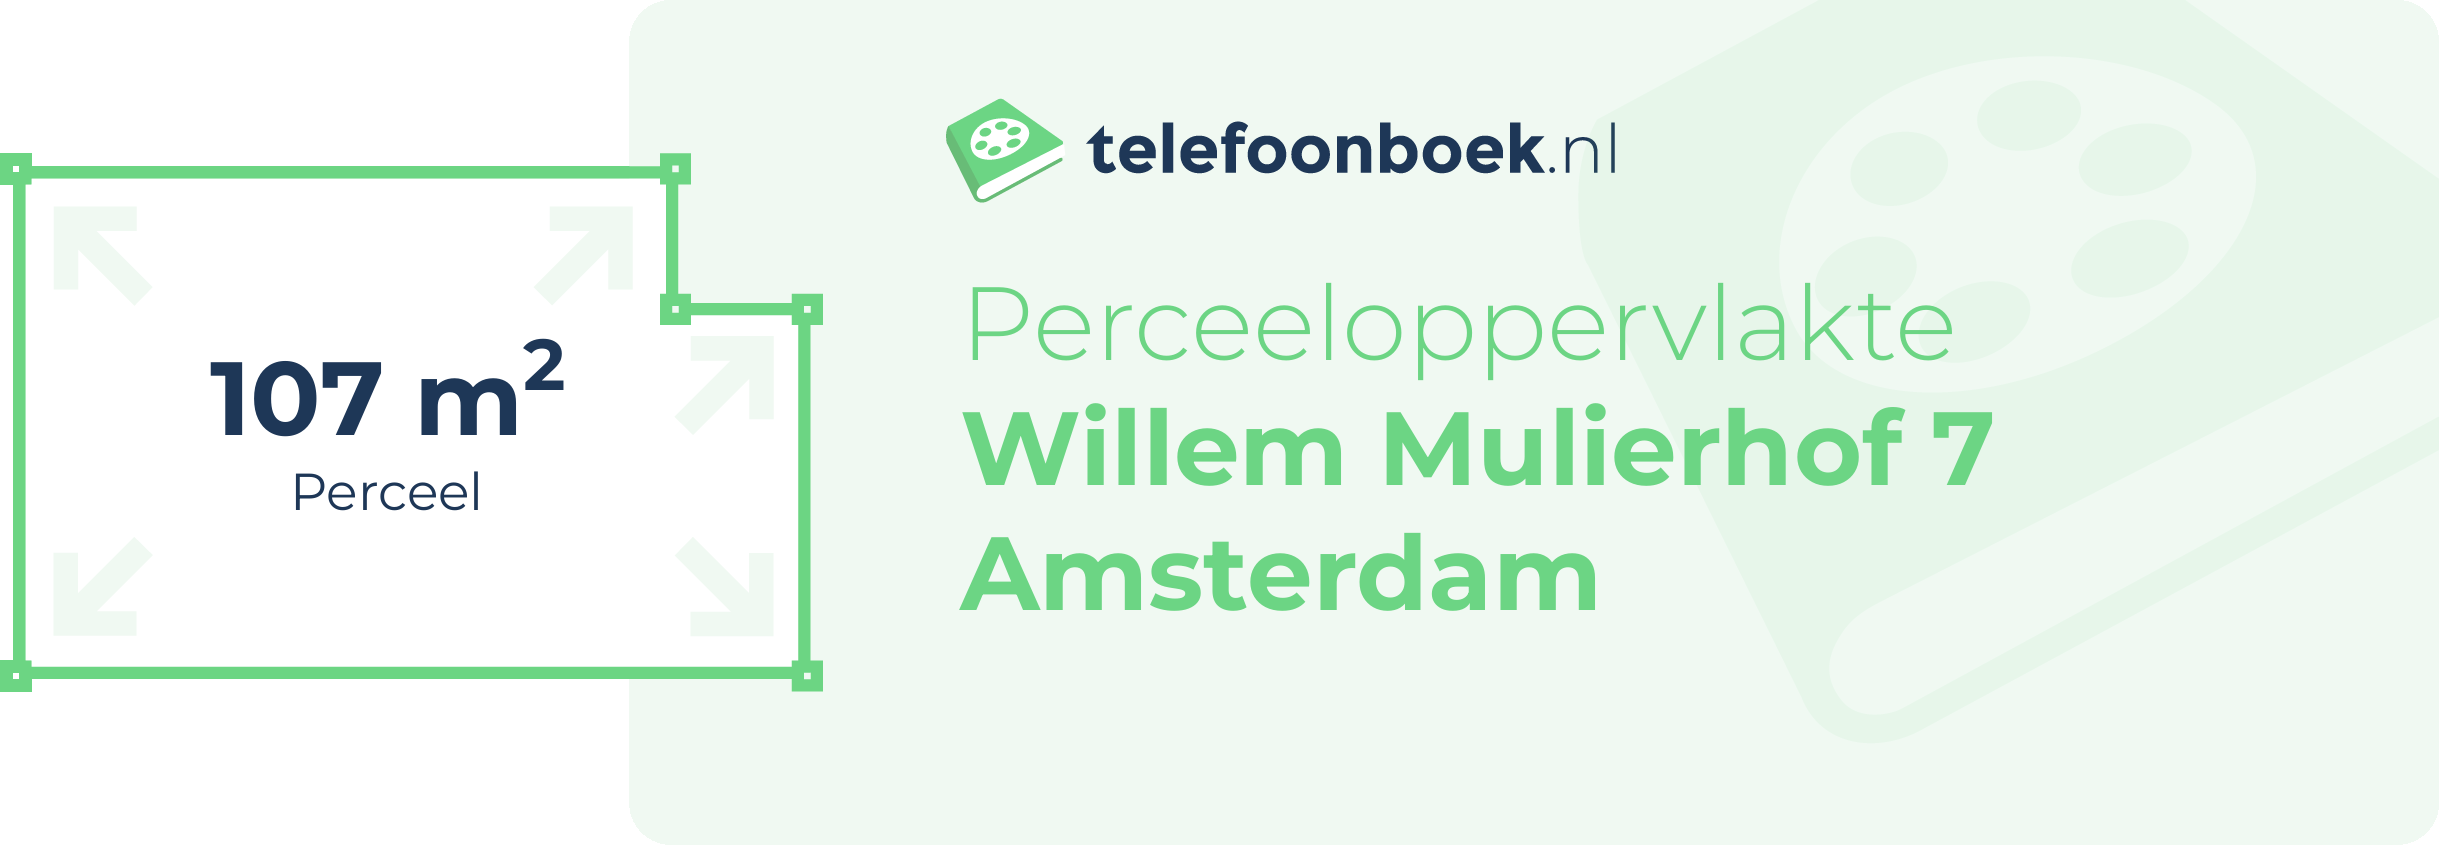 Perceeloppervlakte Willem Mulierhof 7 Amsterdam